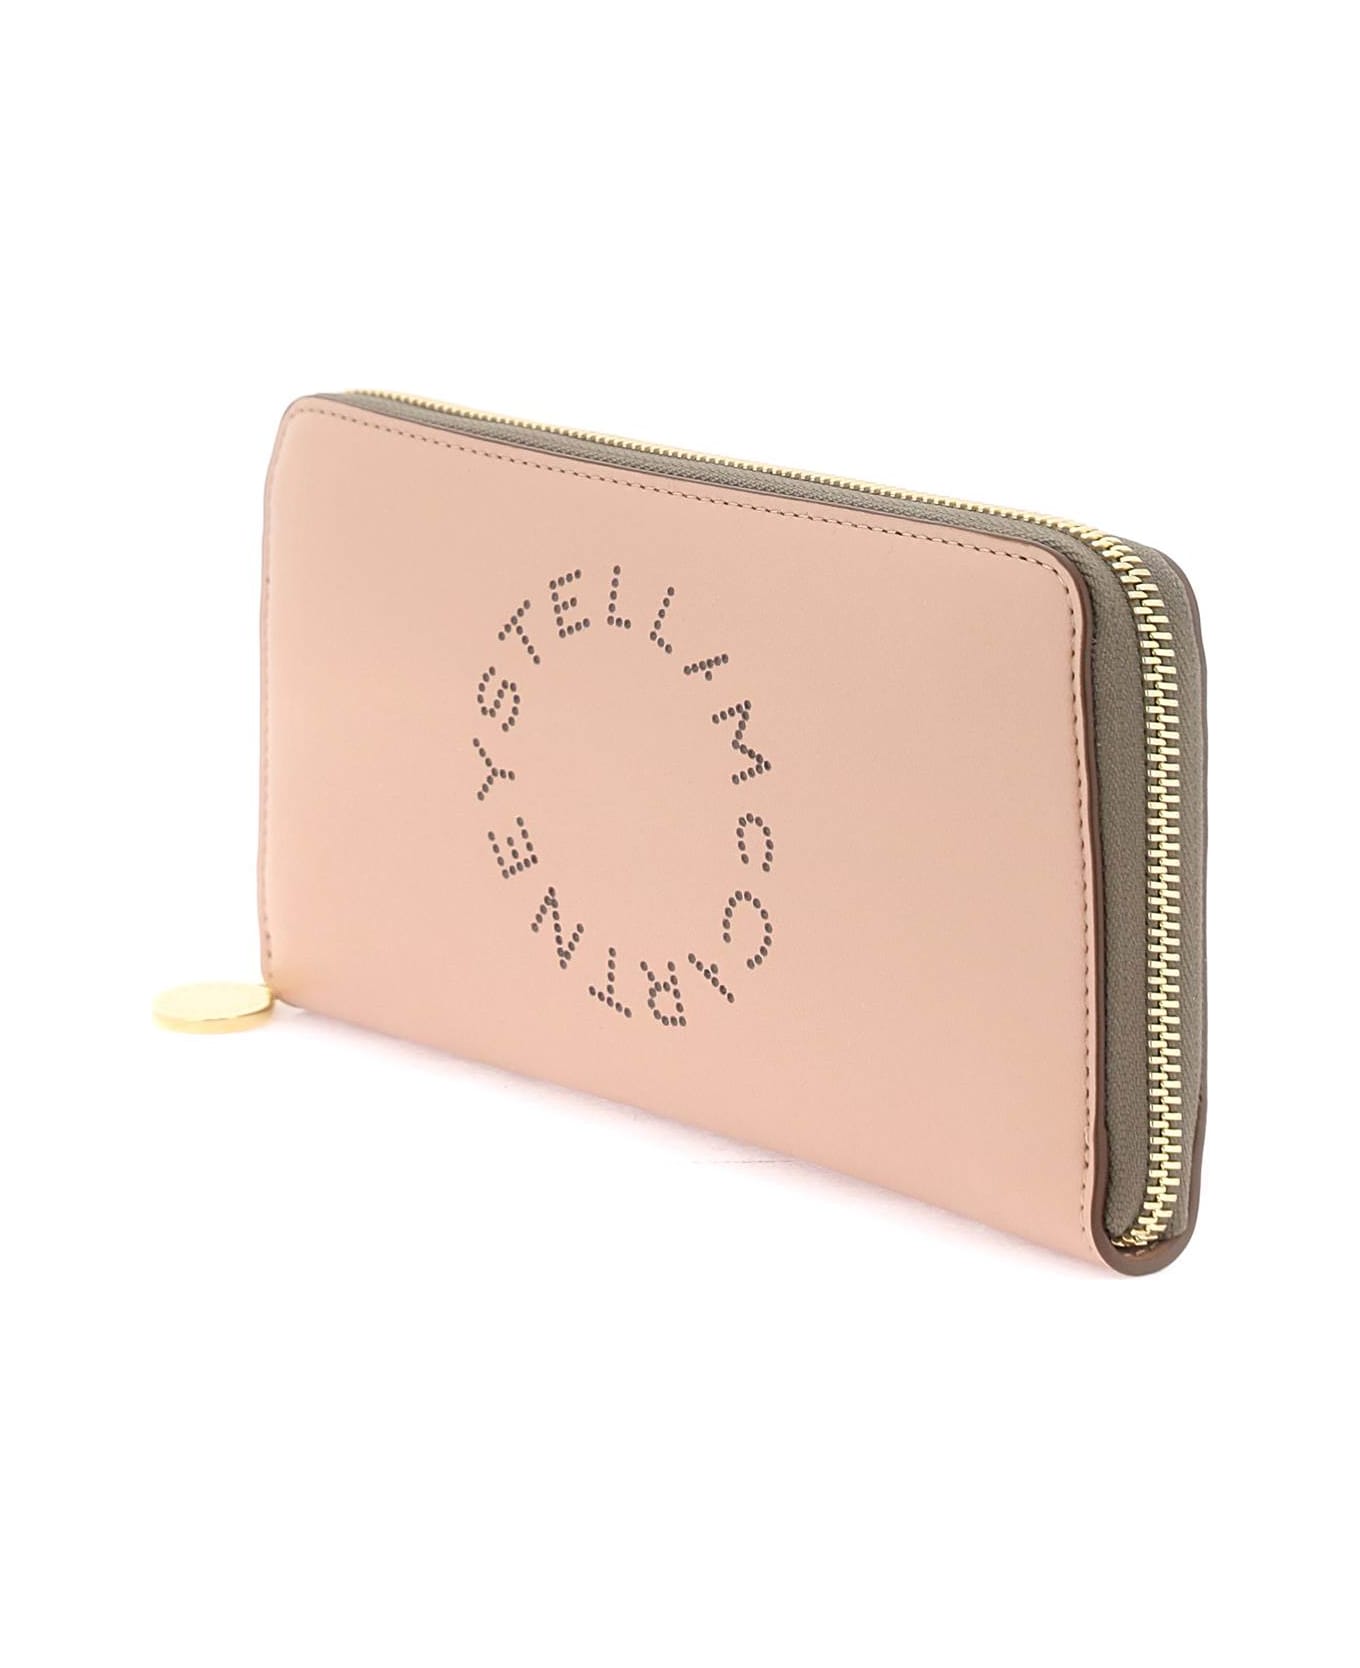 Stella McCartney Continental Wallet - BLUSH (Pink)